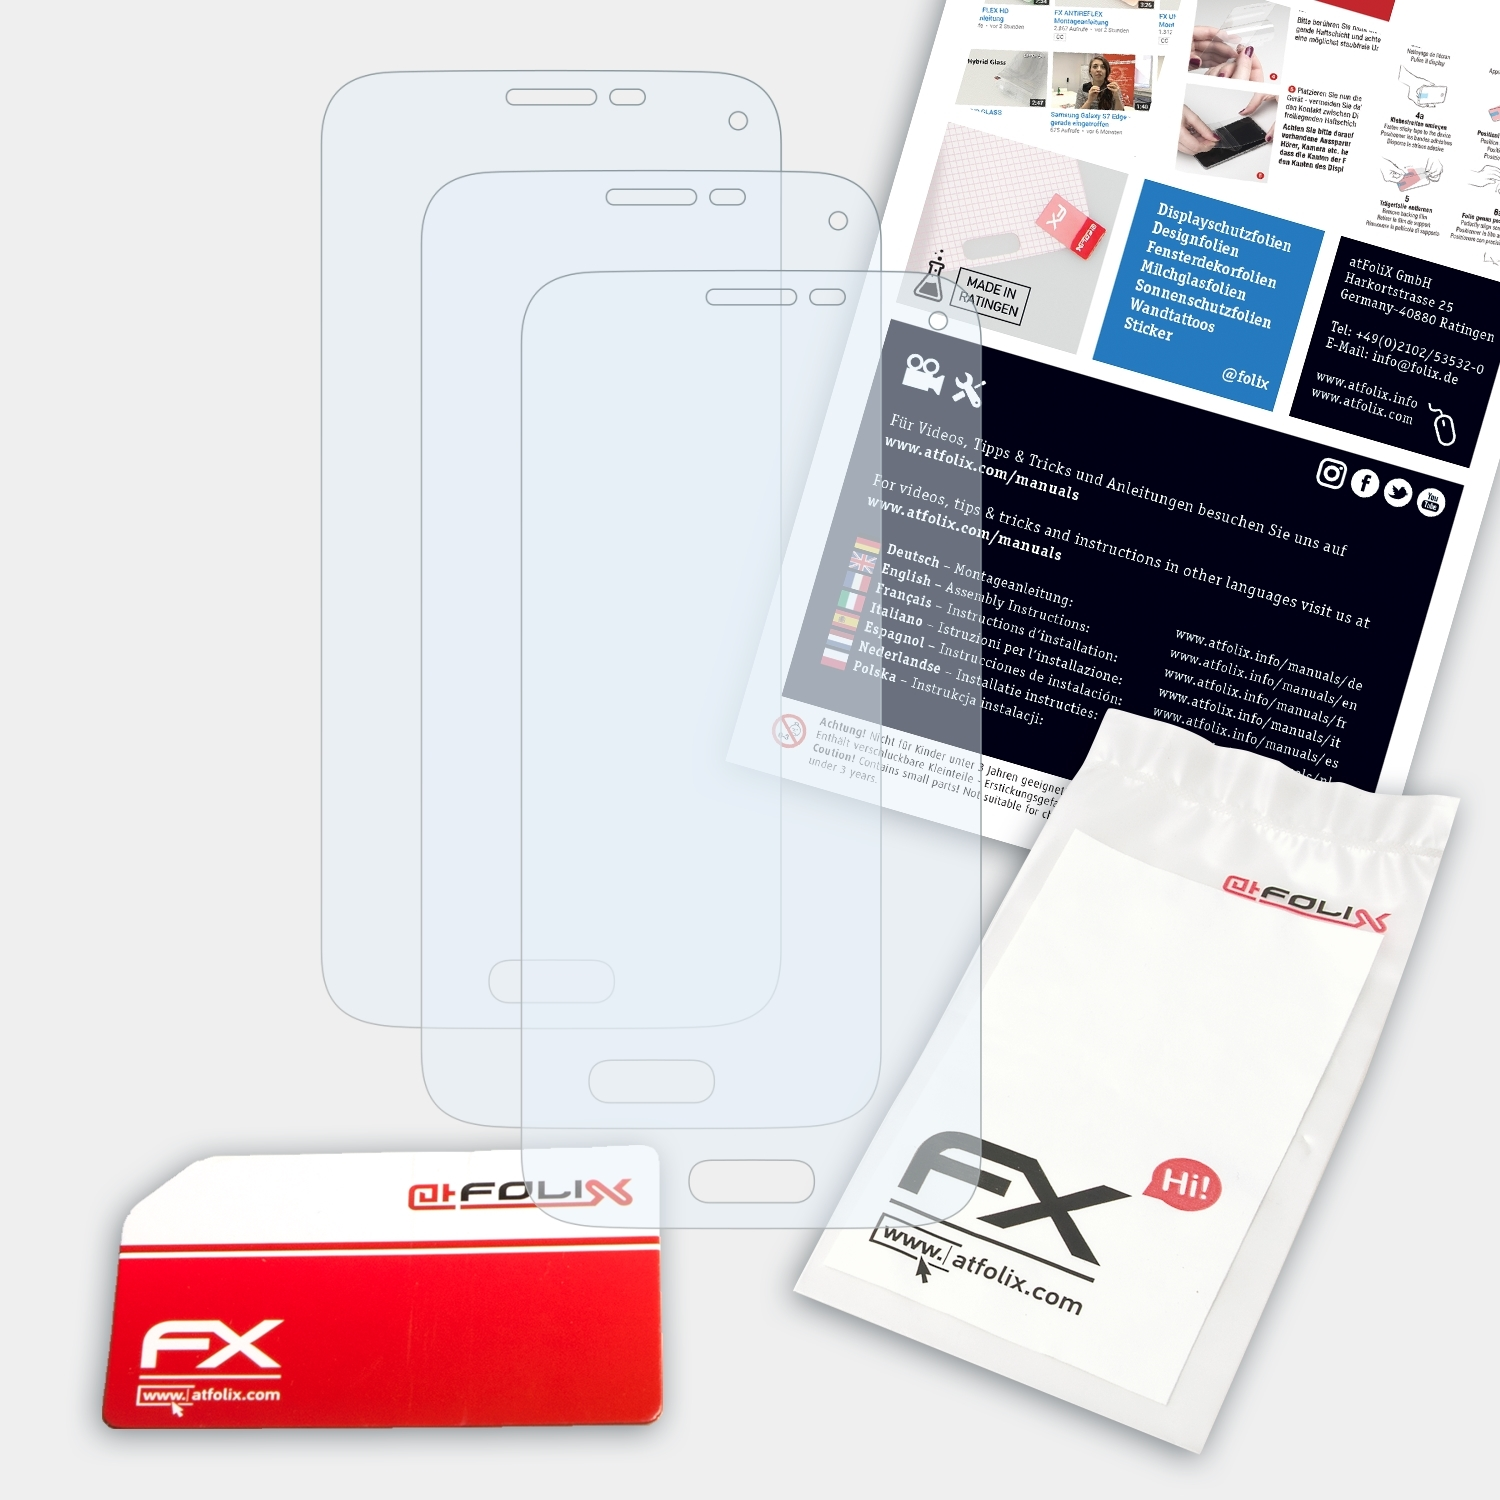 S5 Displayschutz(für Galaxy mini) Samsung 3x FX-Clear ATFOLIX